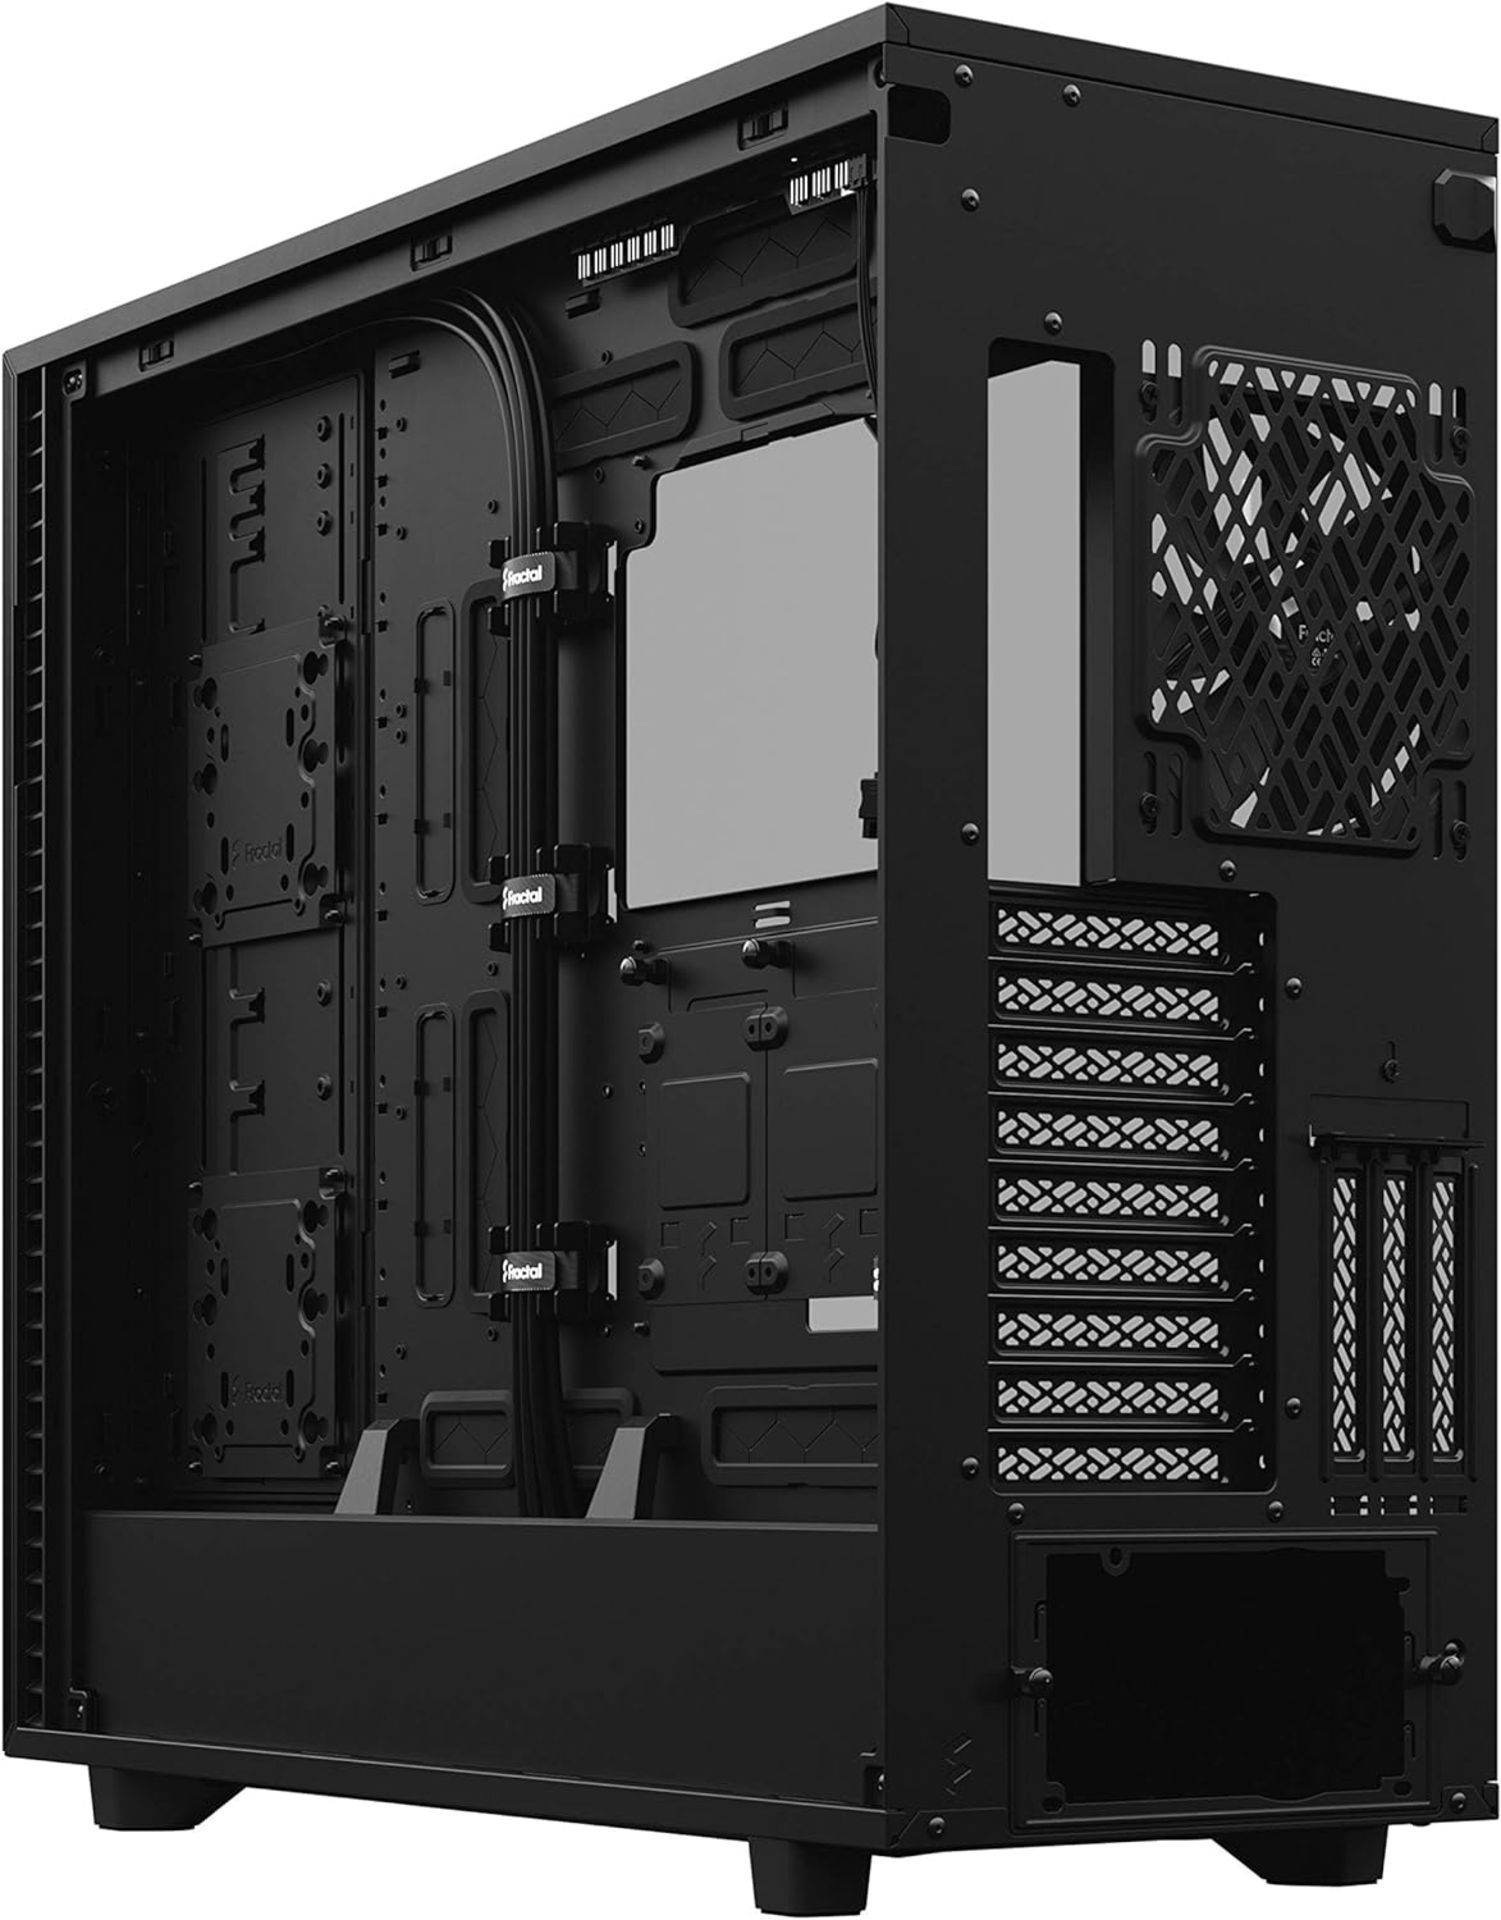 BRAND NEW FACTORY SEALED FRACTAL Design Define 7 XL Full Tower Case - BLACK. RRP £195.99. (PCK4). - Image 6 of 9